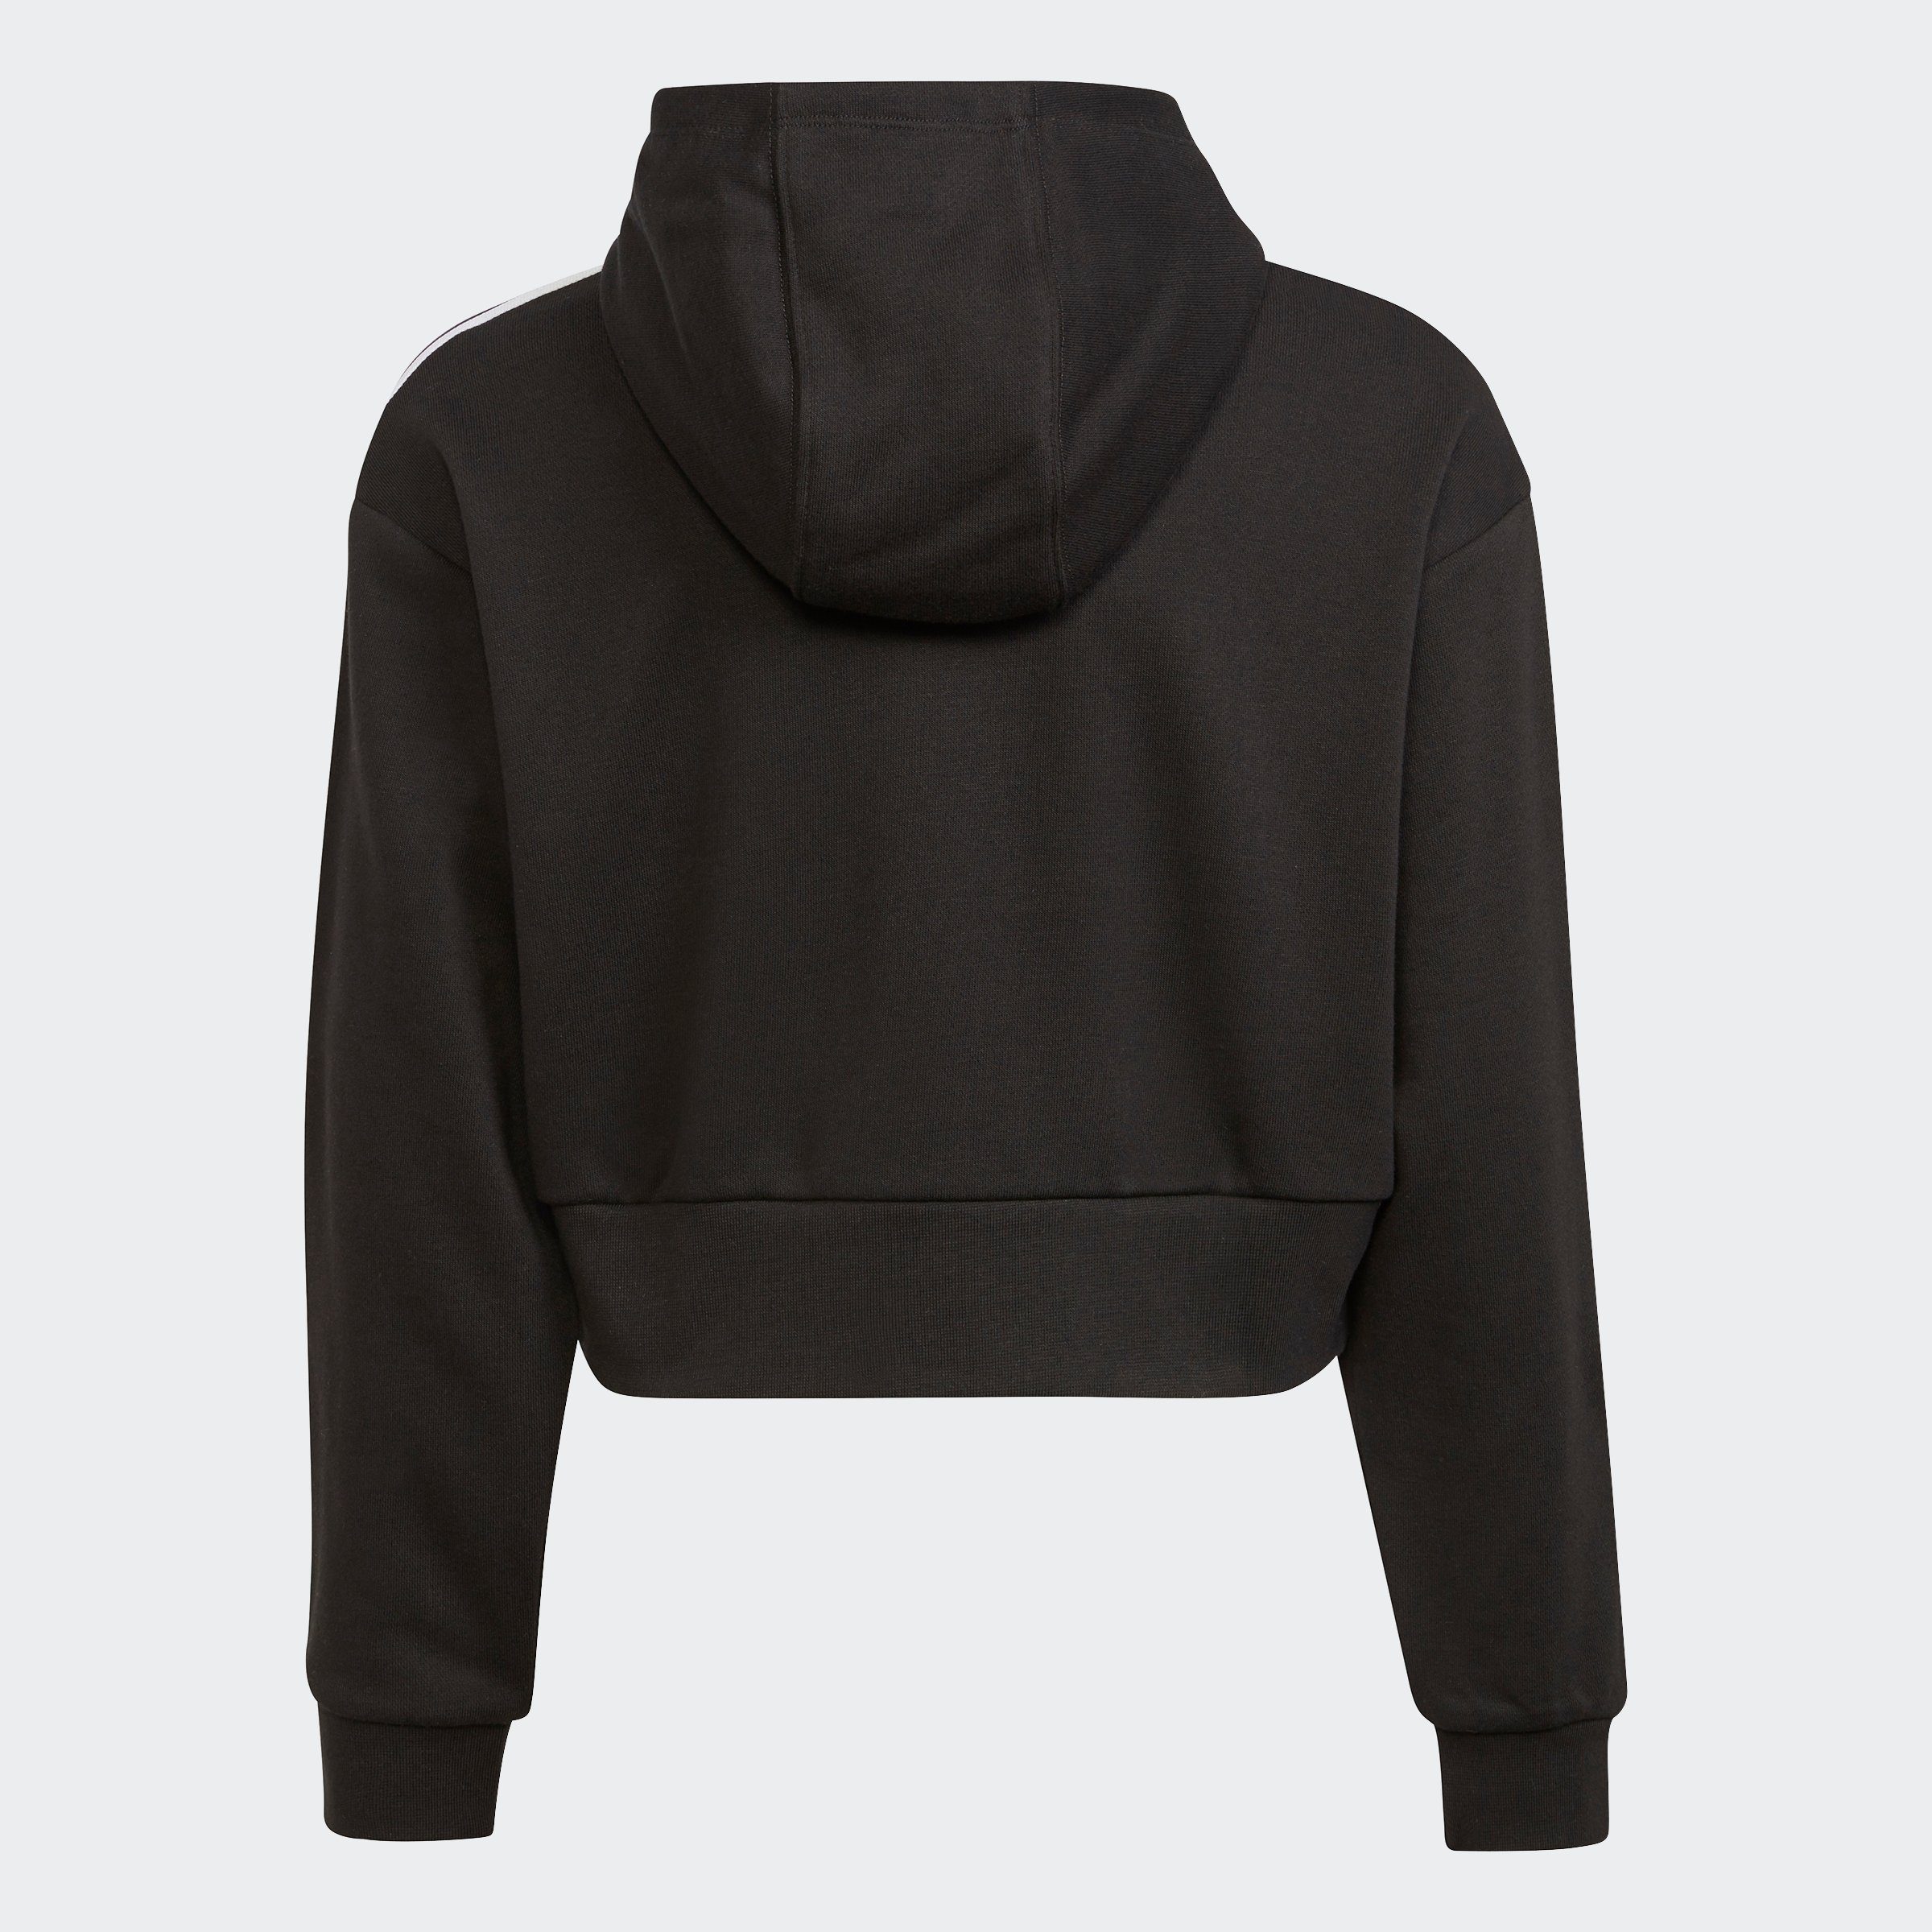 CROPPED Black Sweatshirt adidas / ADICOLOR White HOODIE Originals